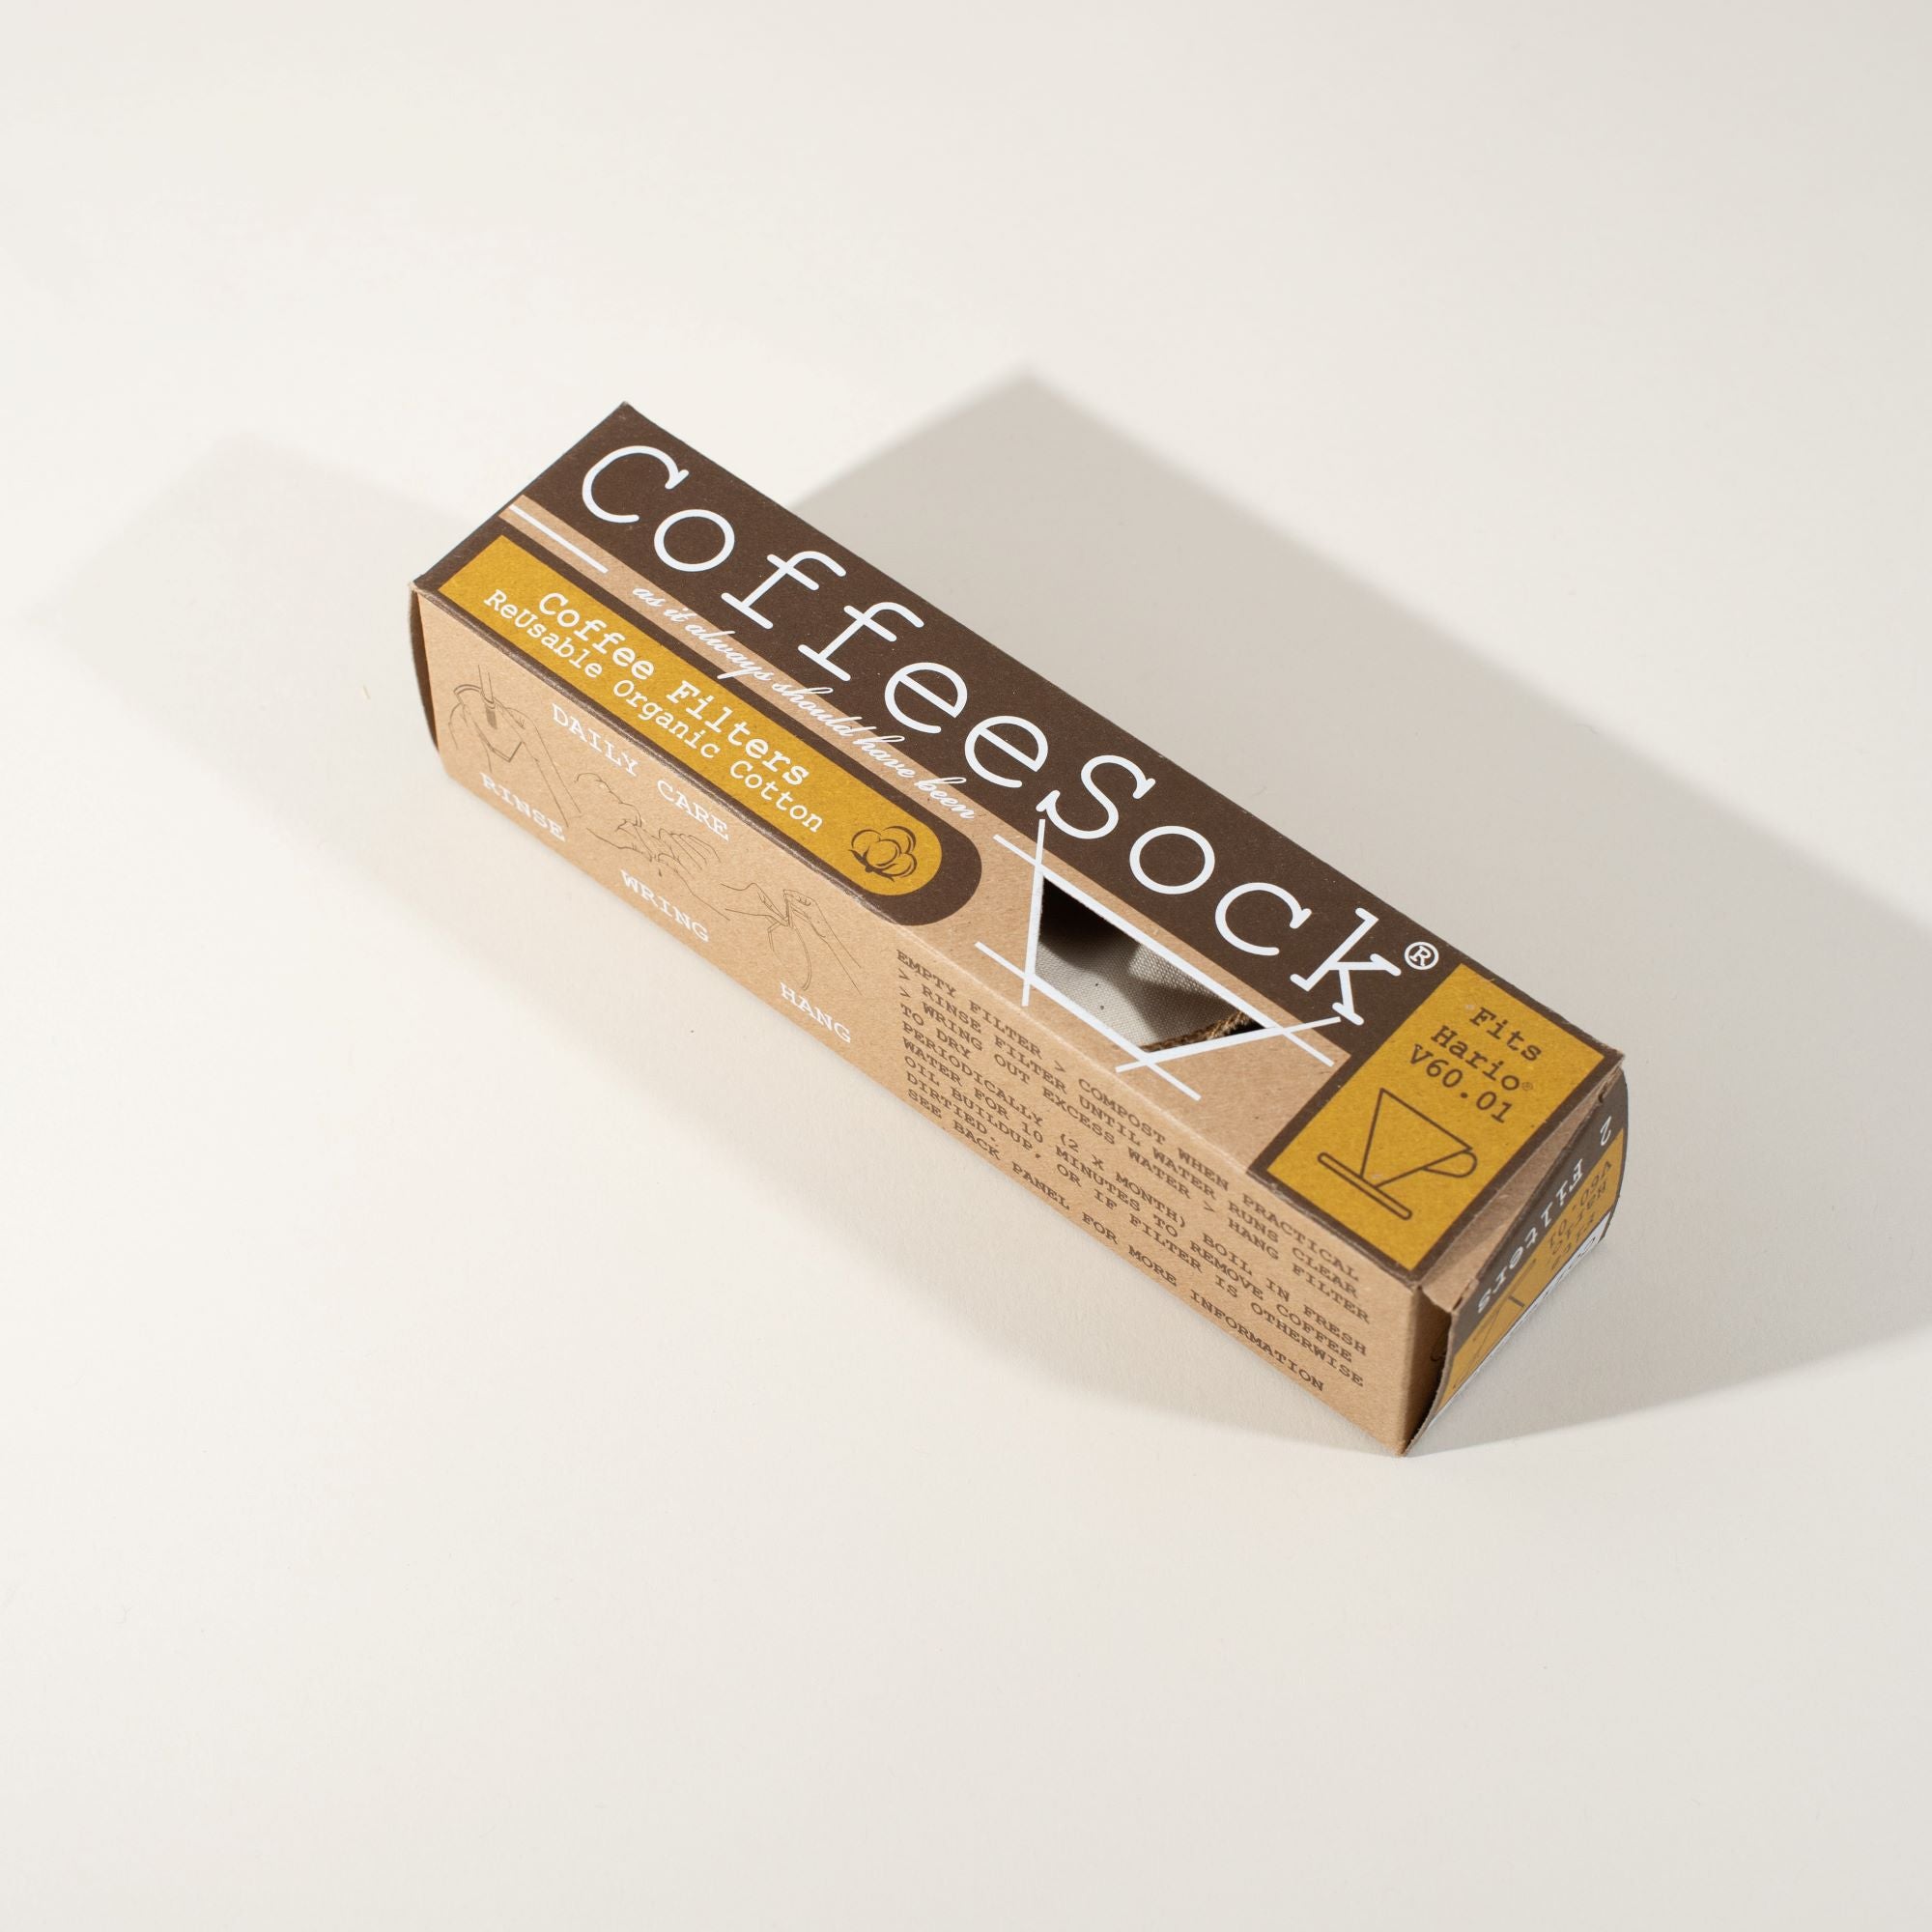 CoffeeSock - Cloth Filter